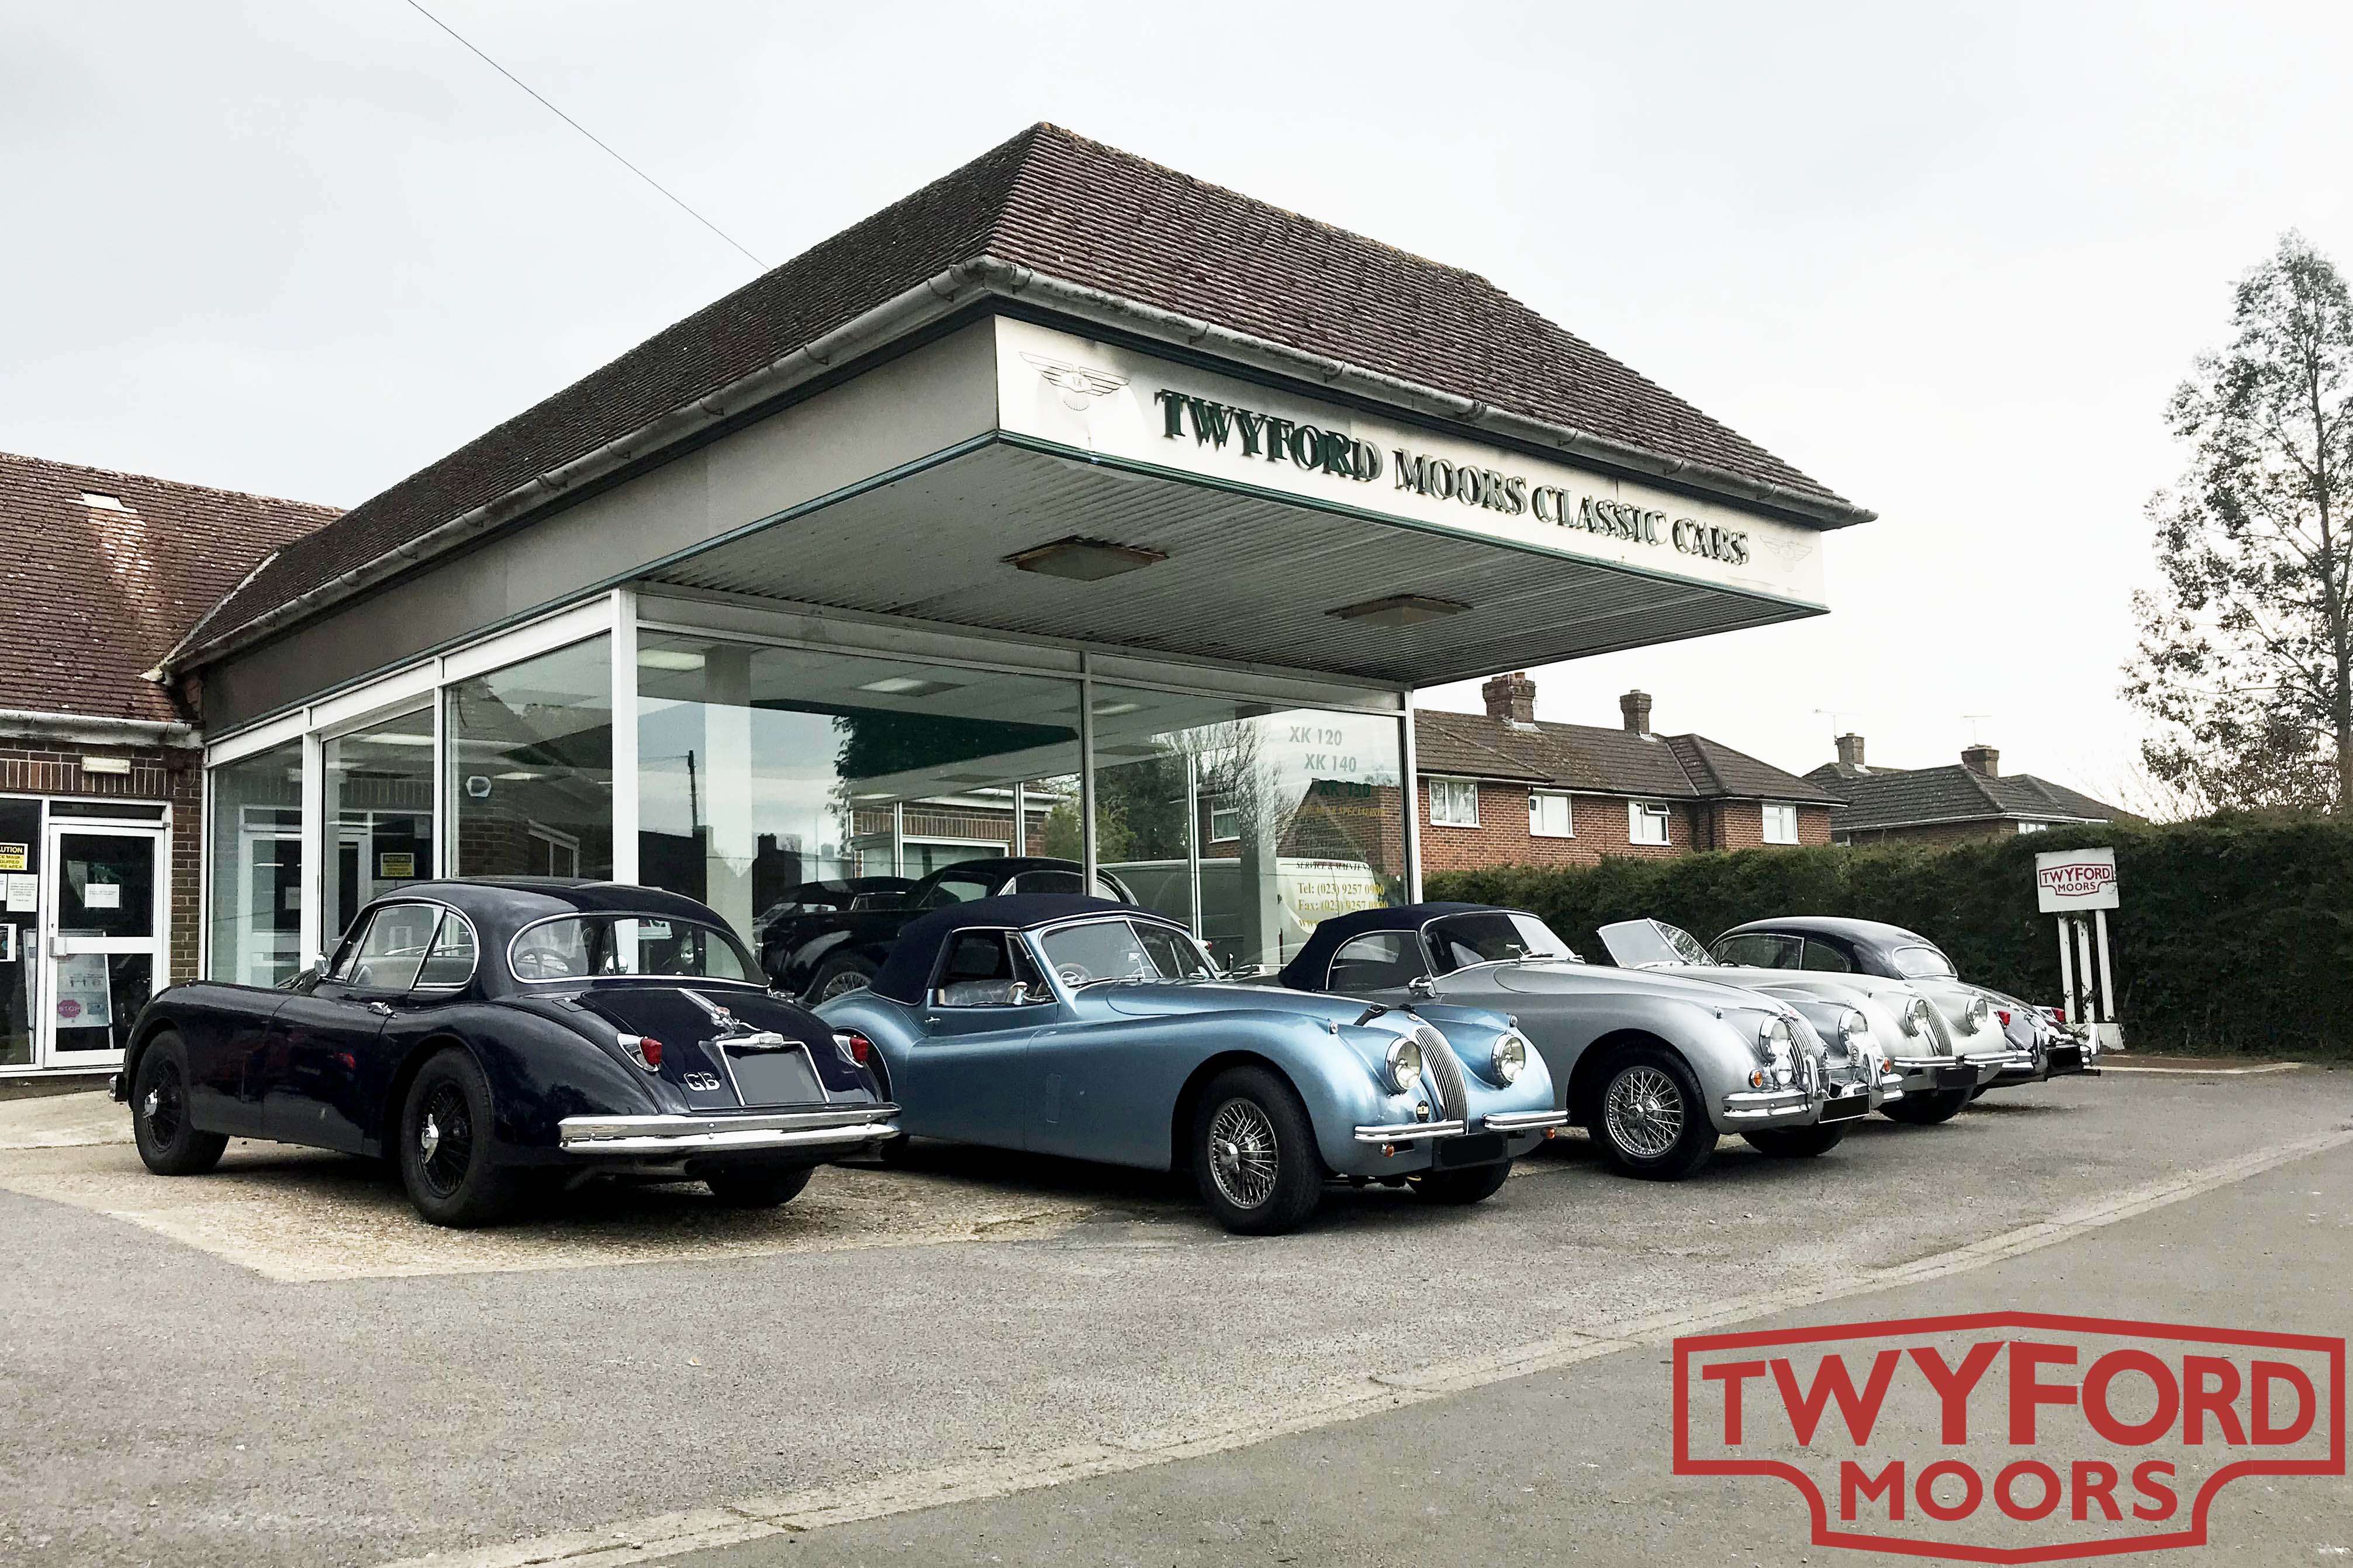 Classic cars at Twyford Moors Hampshire garage